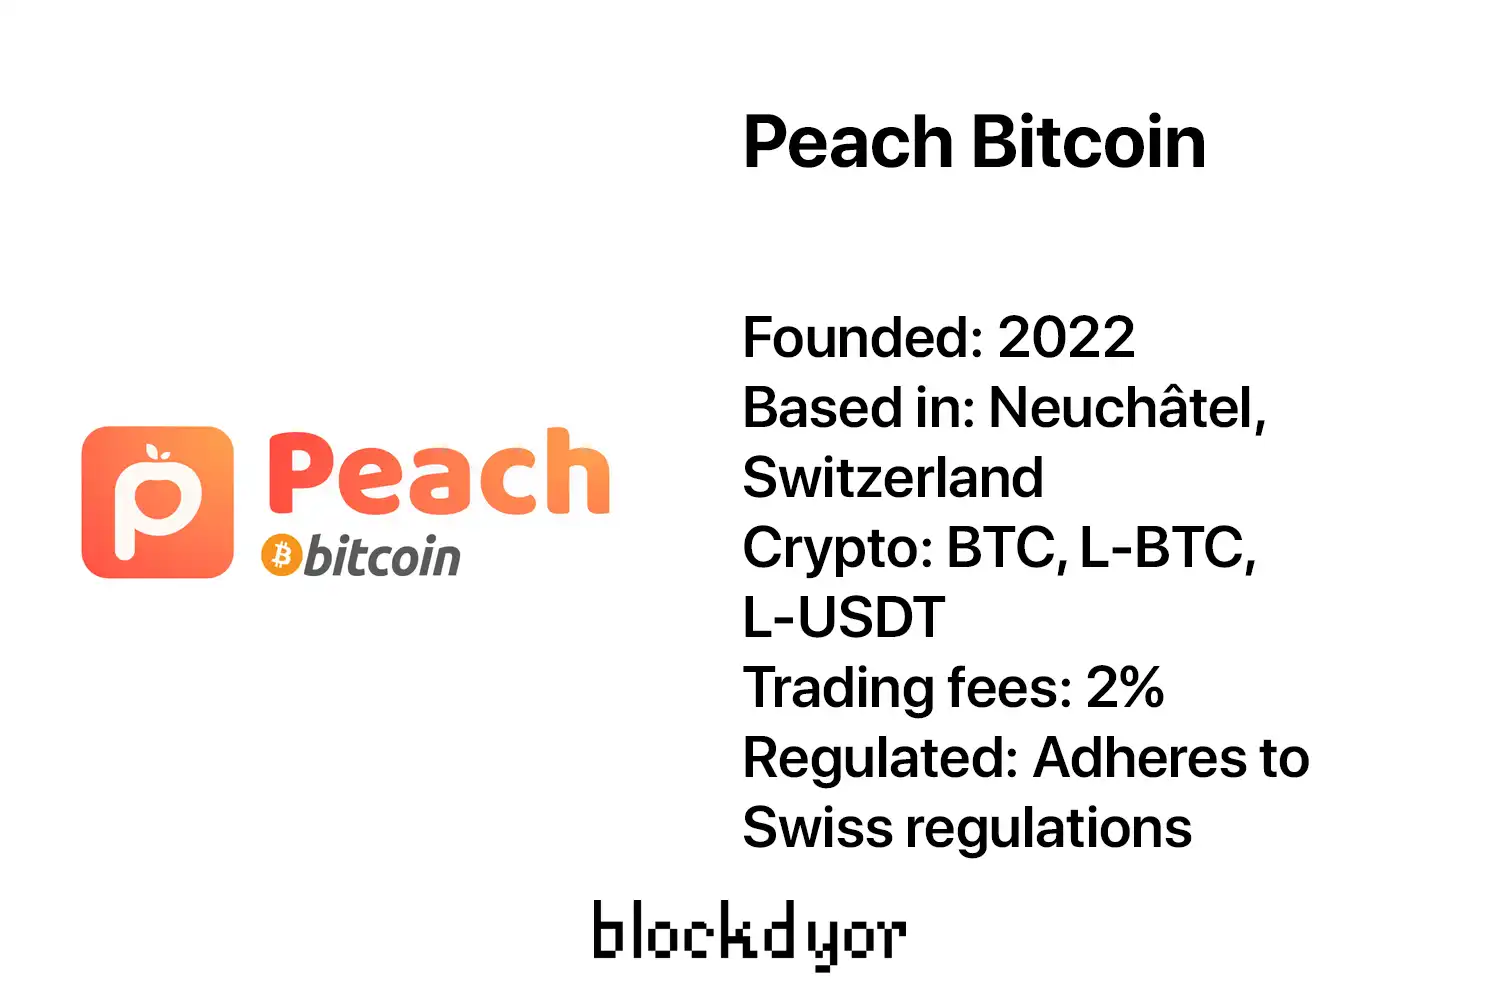 Peach Bitcoin Overview